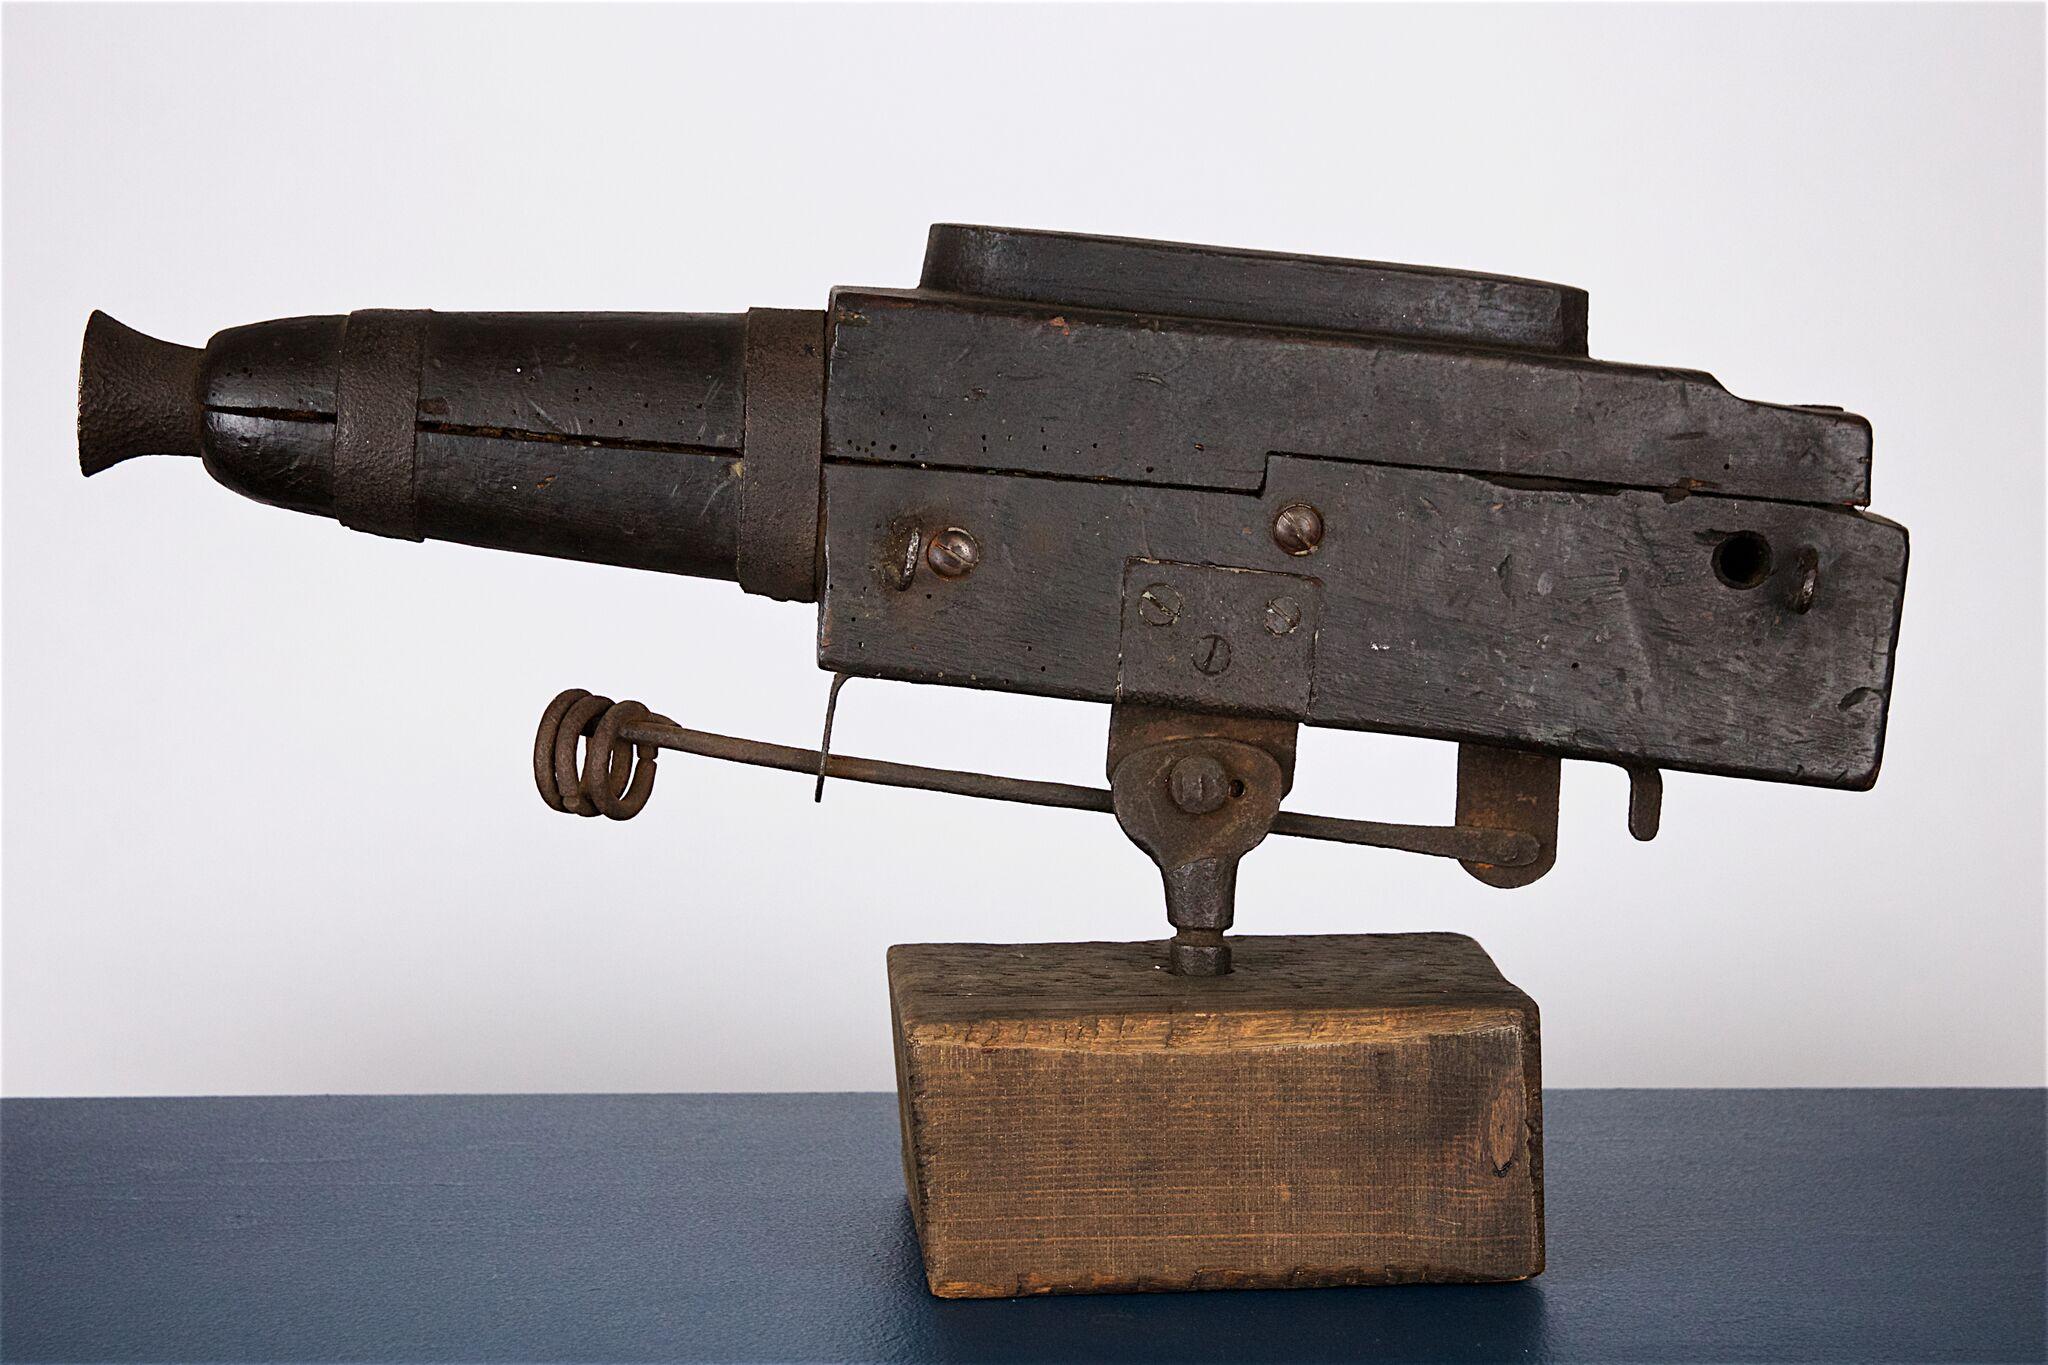 Iron Flintlock Alarm Gun with Flared Barrel, circa 1800